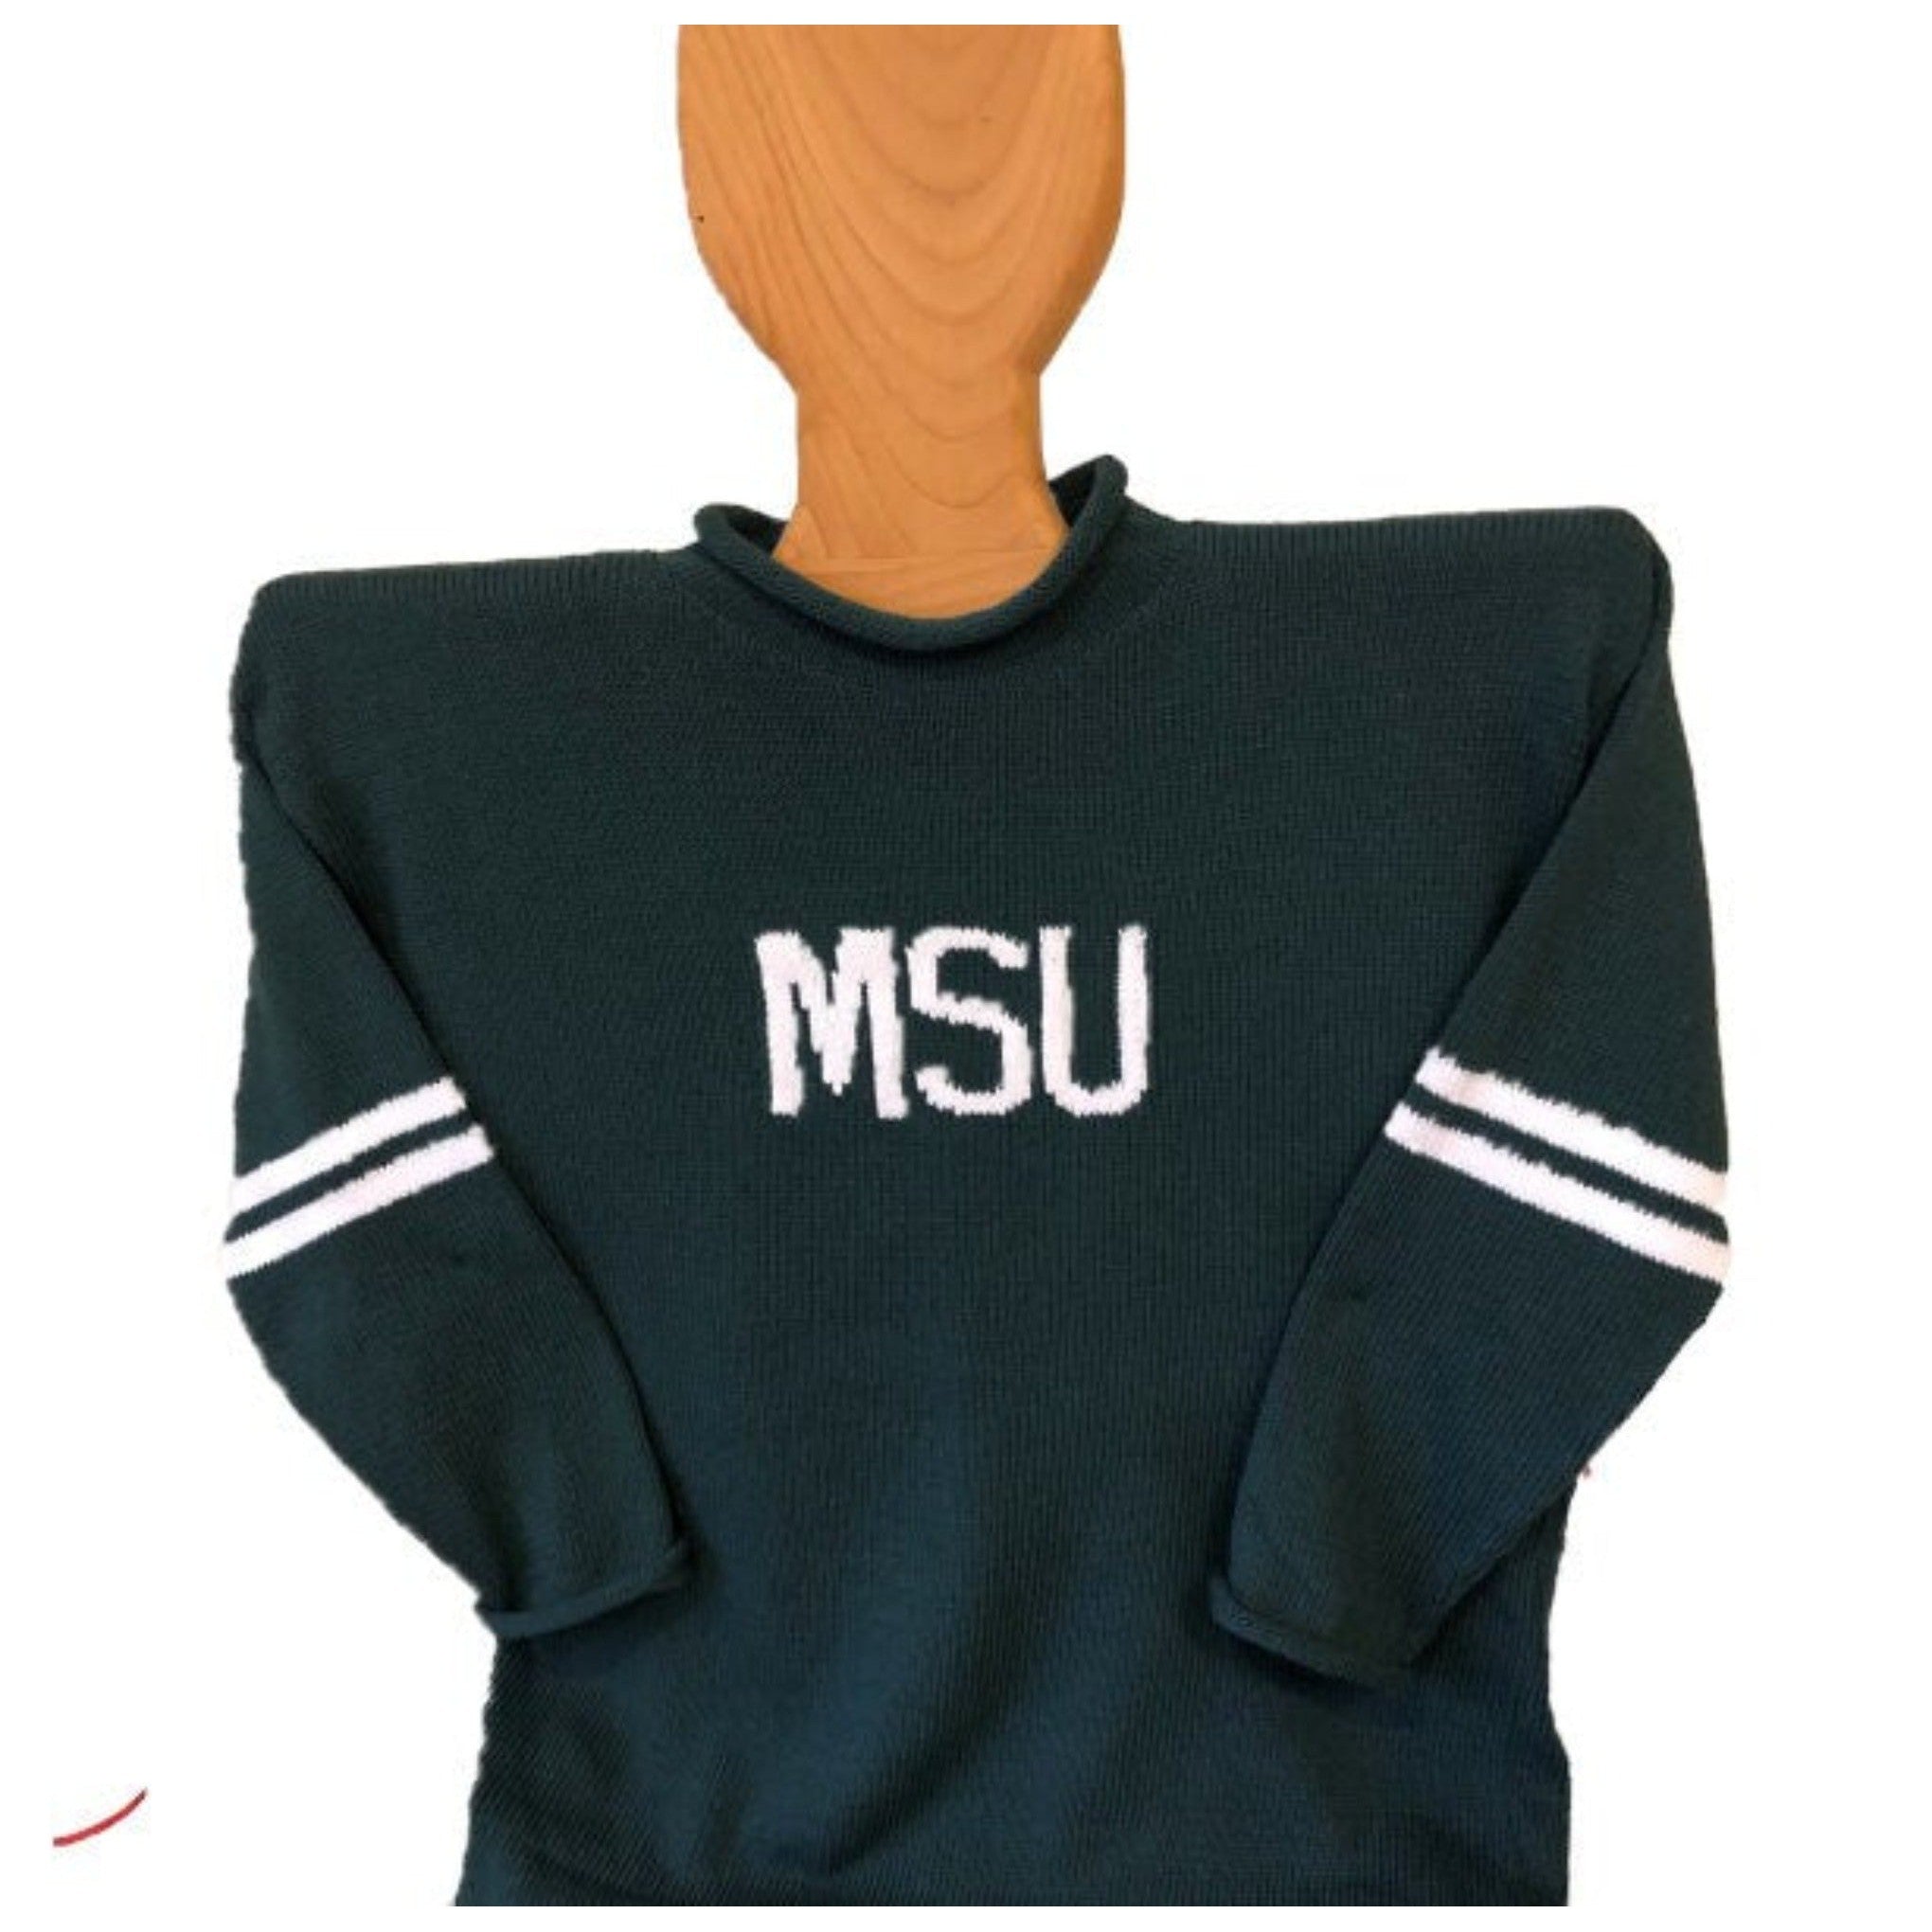 MSU University Alumni sweater